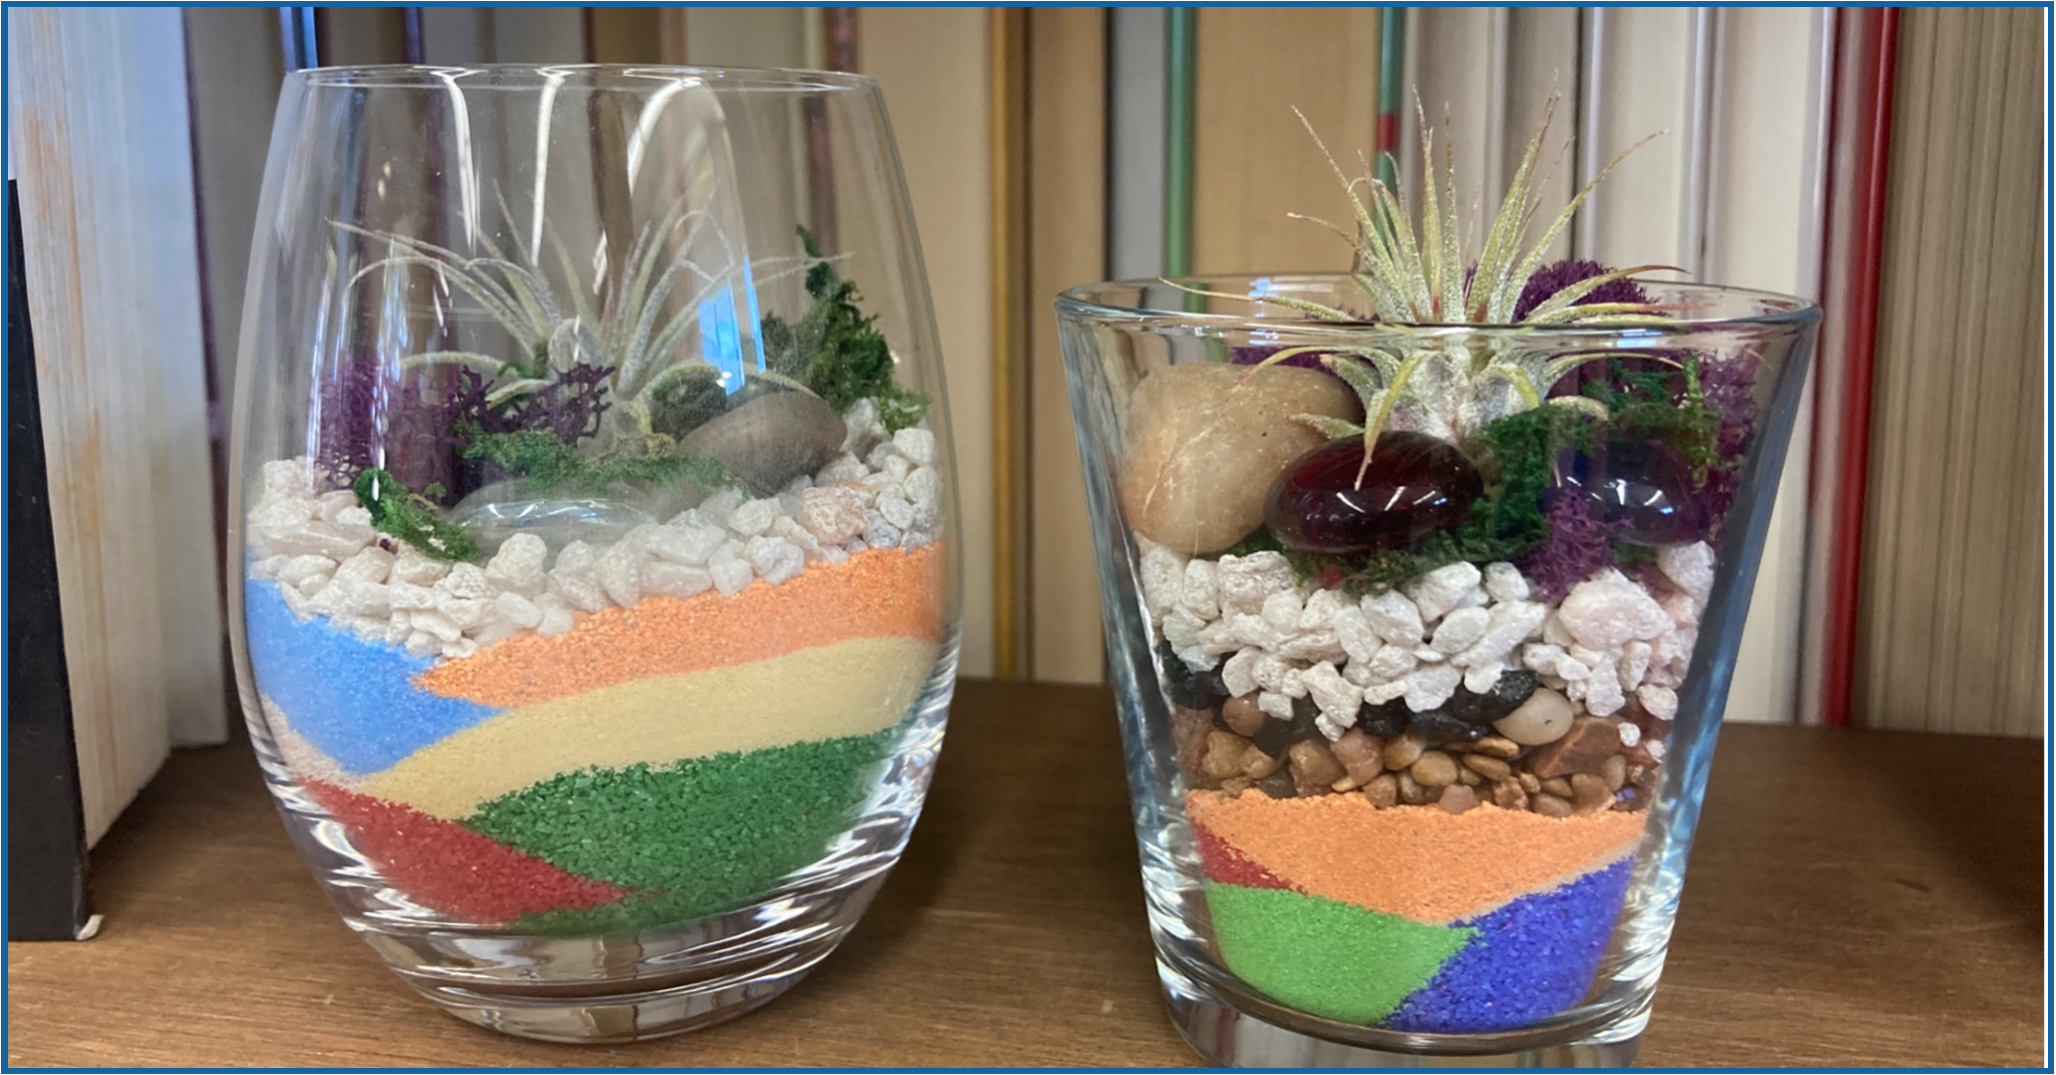 Sand art in glass jars